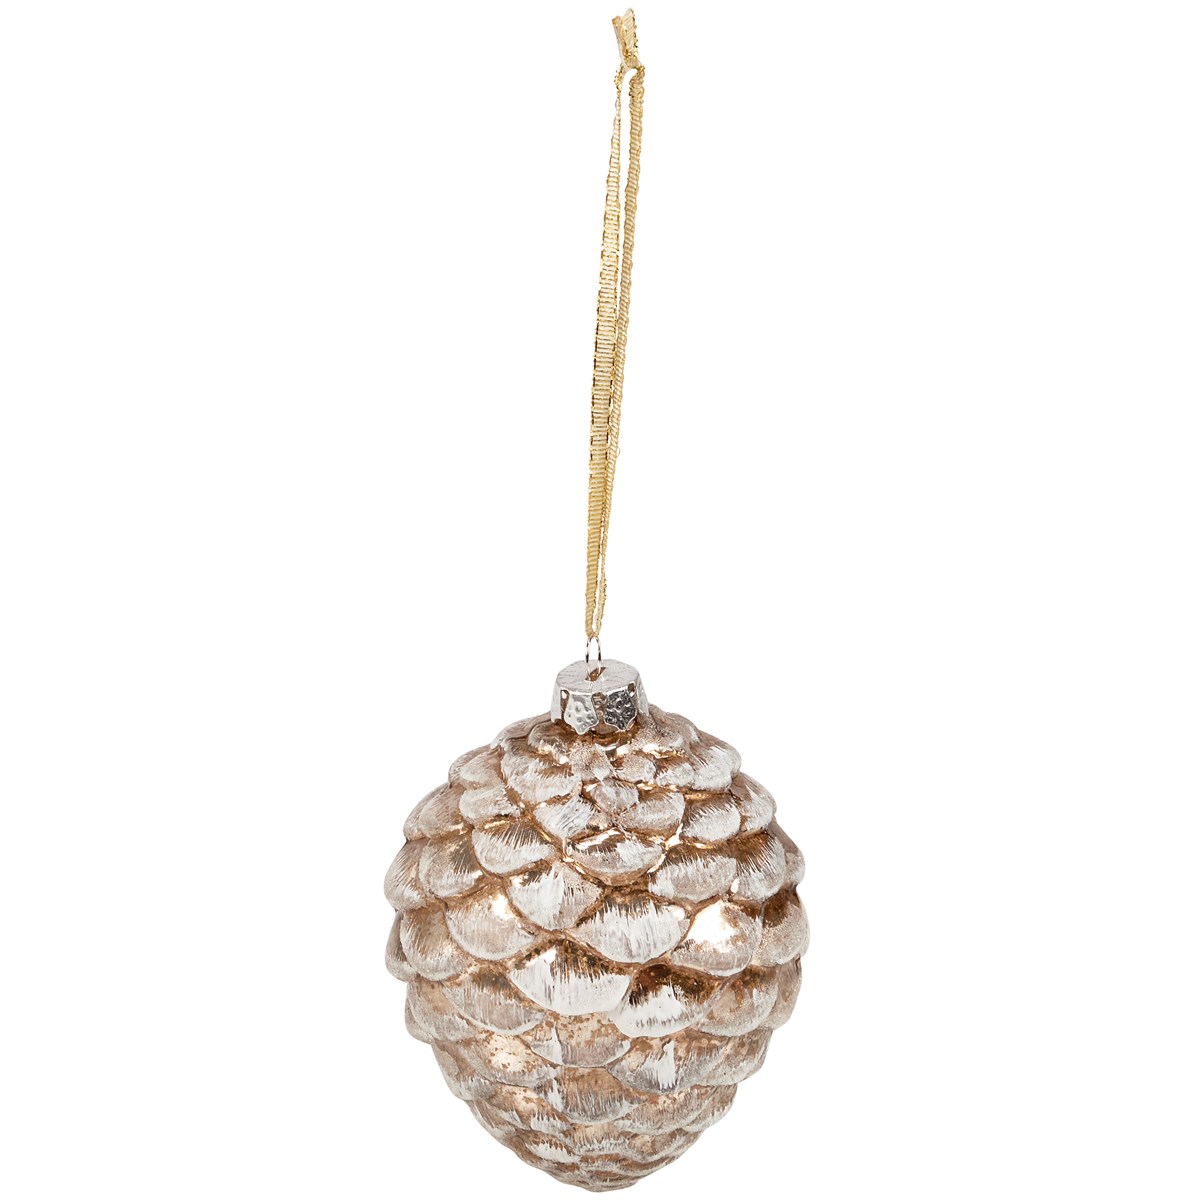 Glass Snowy Pinecone Christmas Ornament - Glass, Metal, Glitter